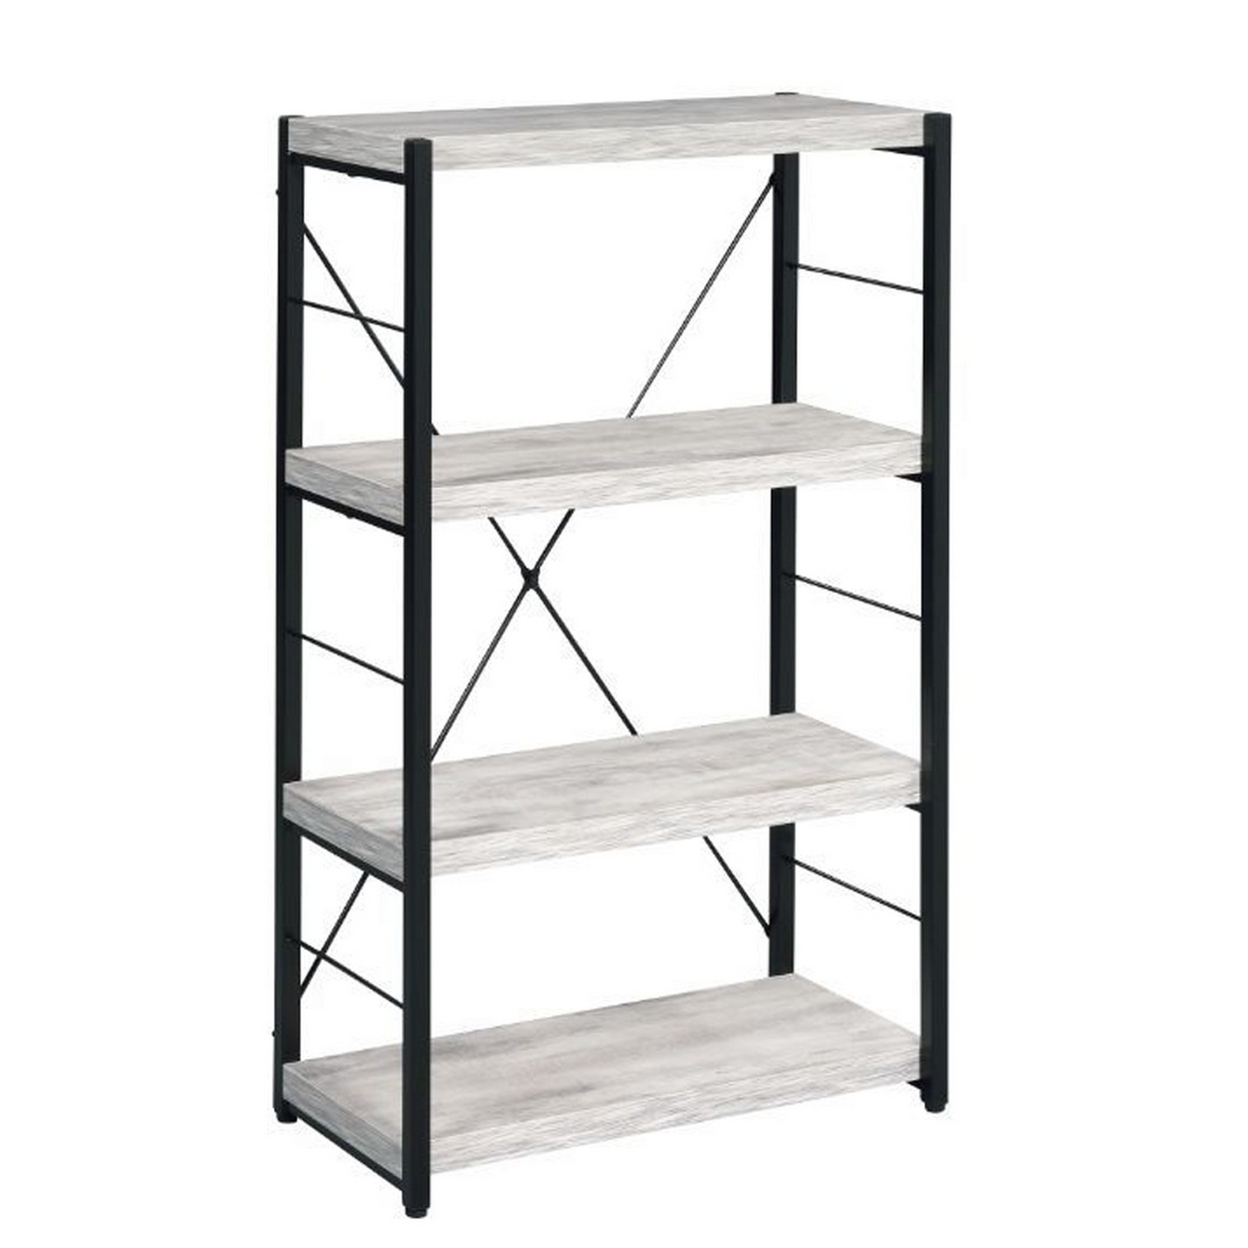 Industrial Bookshelf With 4 Shelves And Open Metal Frame, White And Black- Saltoro Sherpi